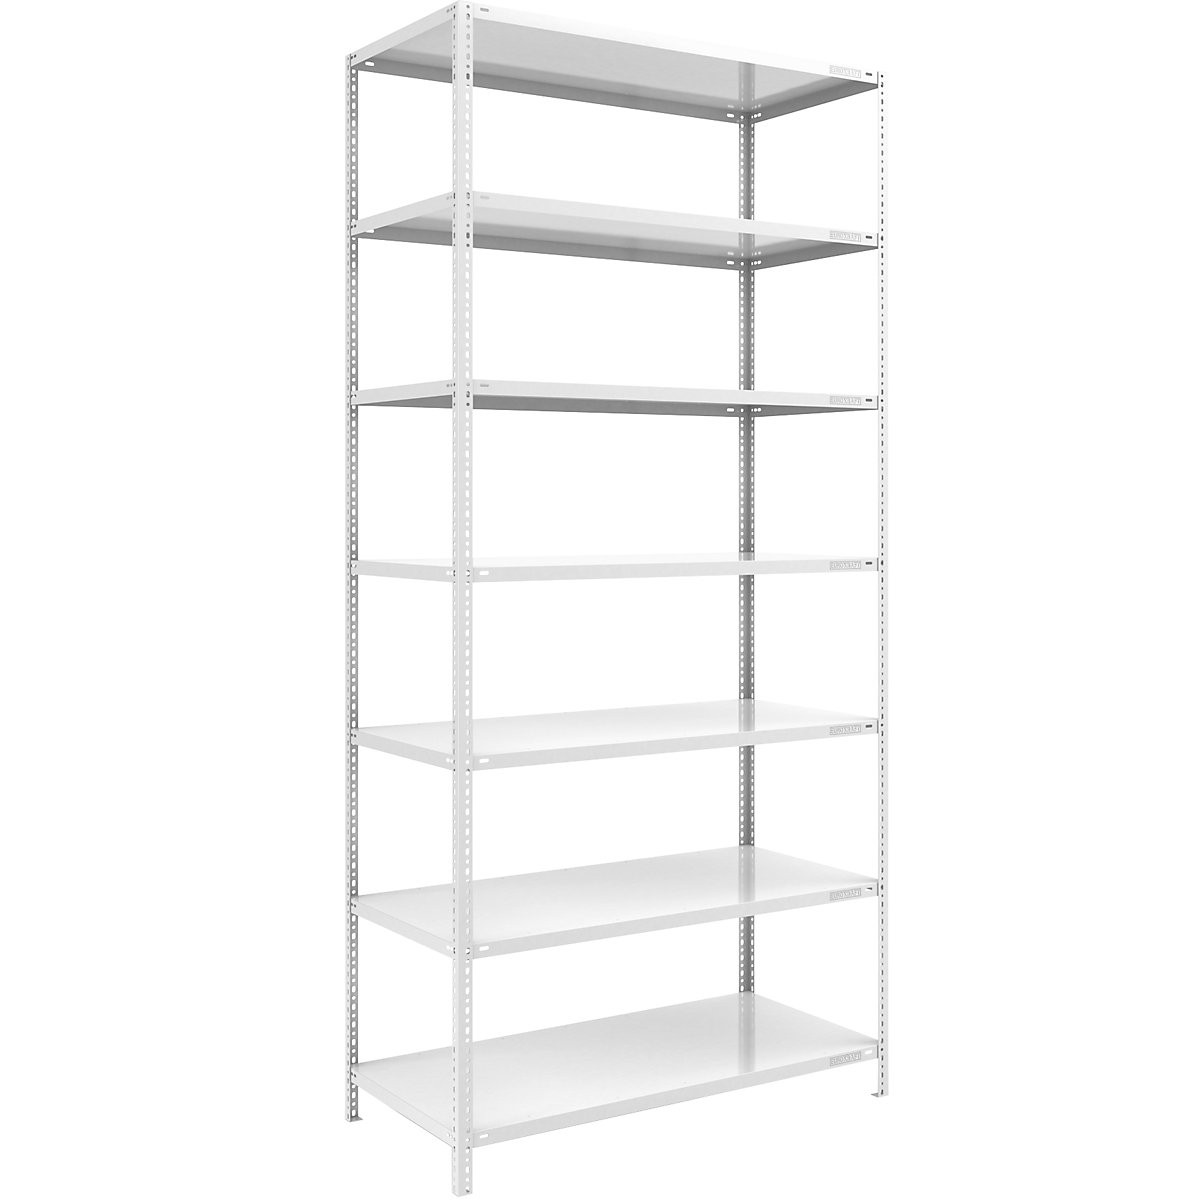 Bolt-together shelf unit, light duty, plastic coated – eurokraft pro, shelf unit height 3000 mm, shelf width 1300 mm, depth 800 mm, standard shelf unit-12